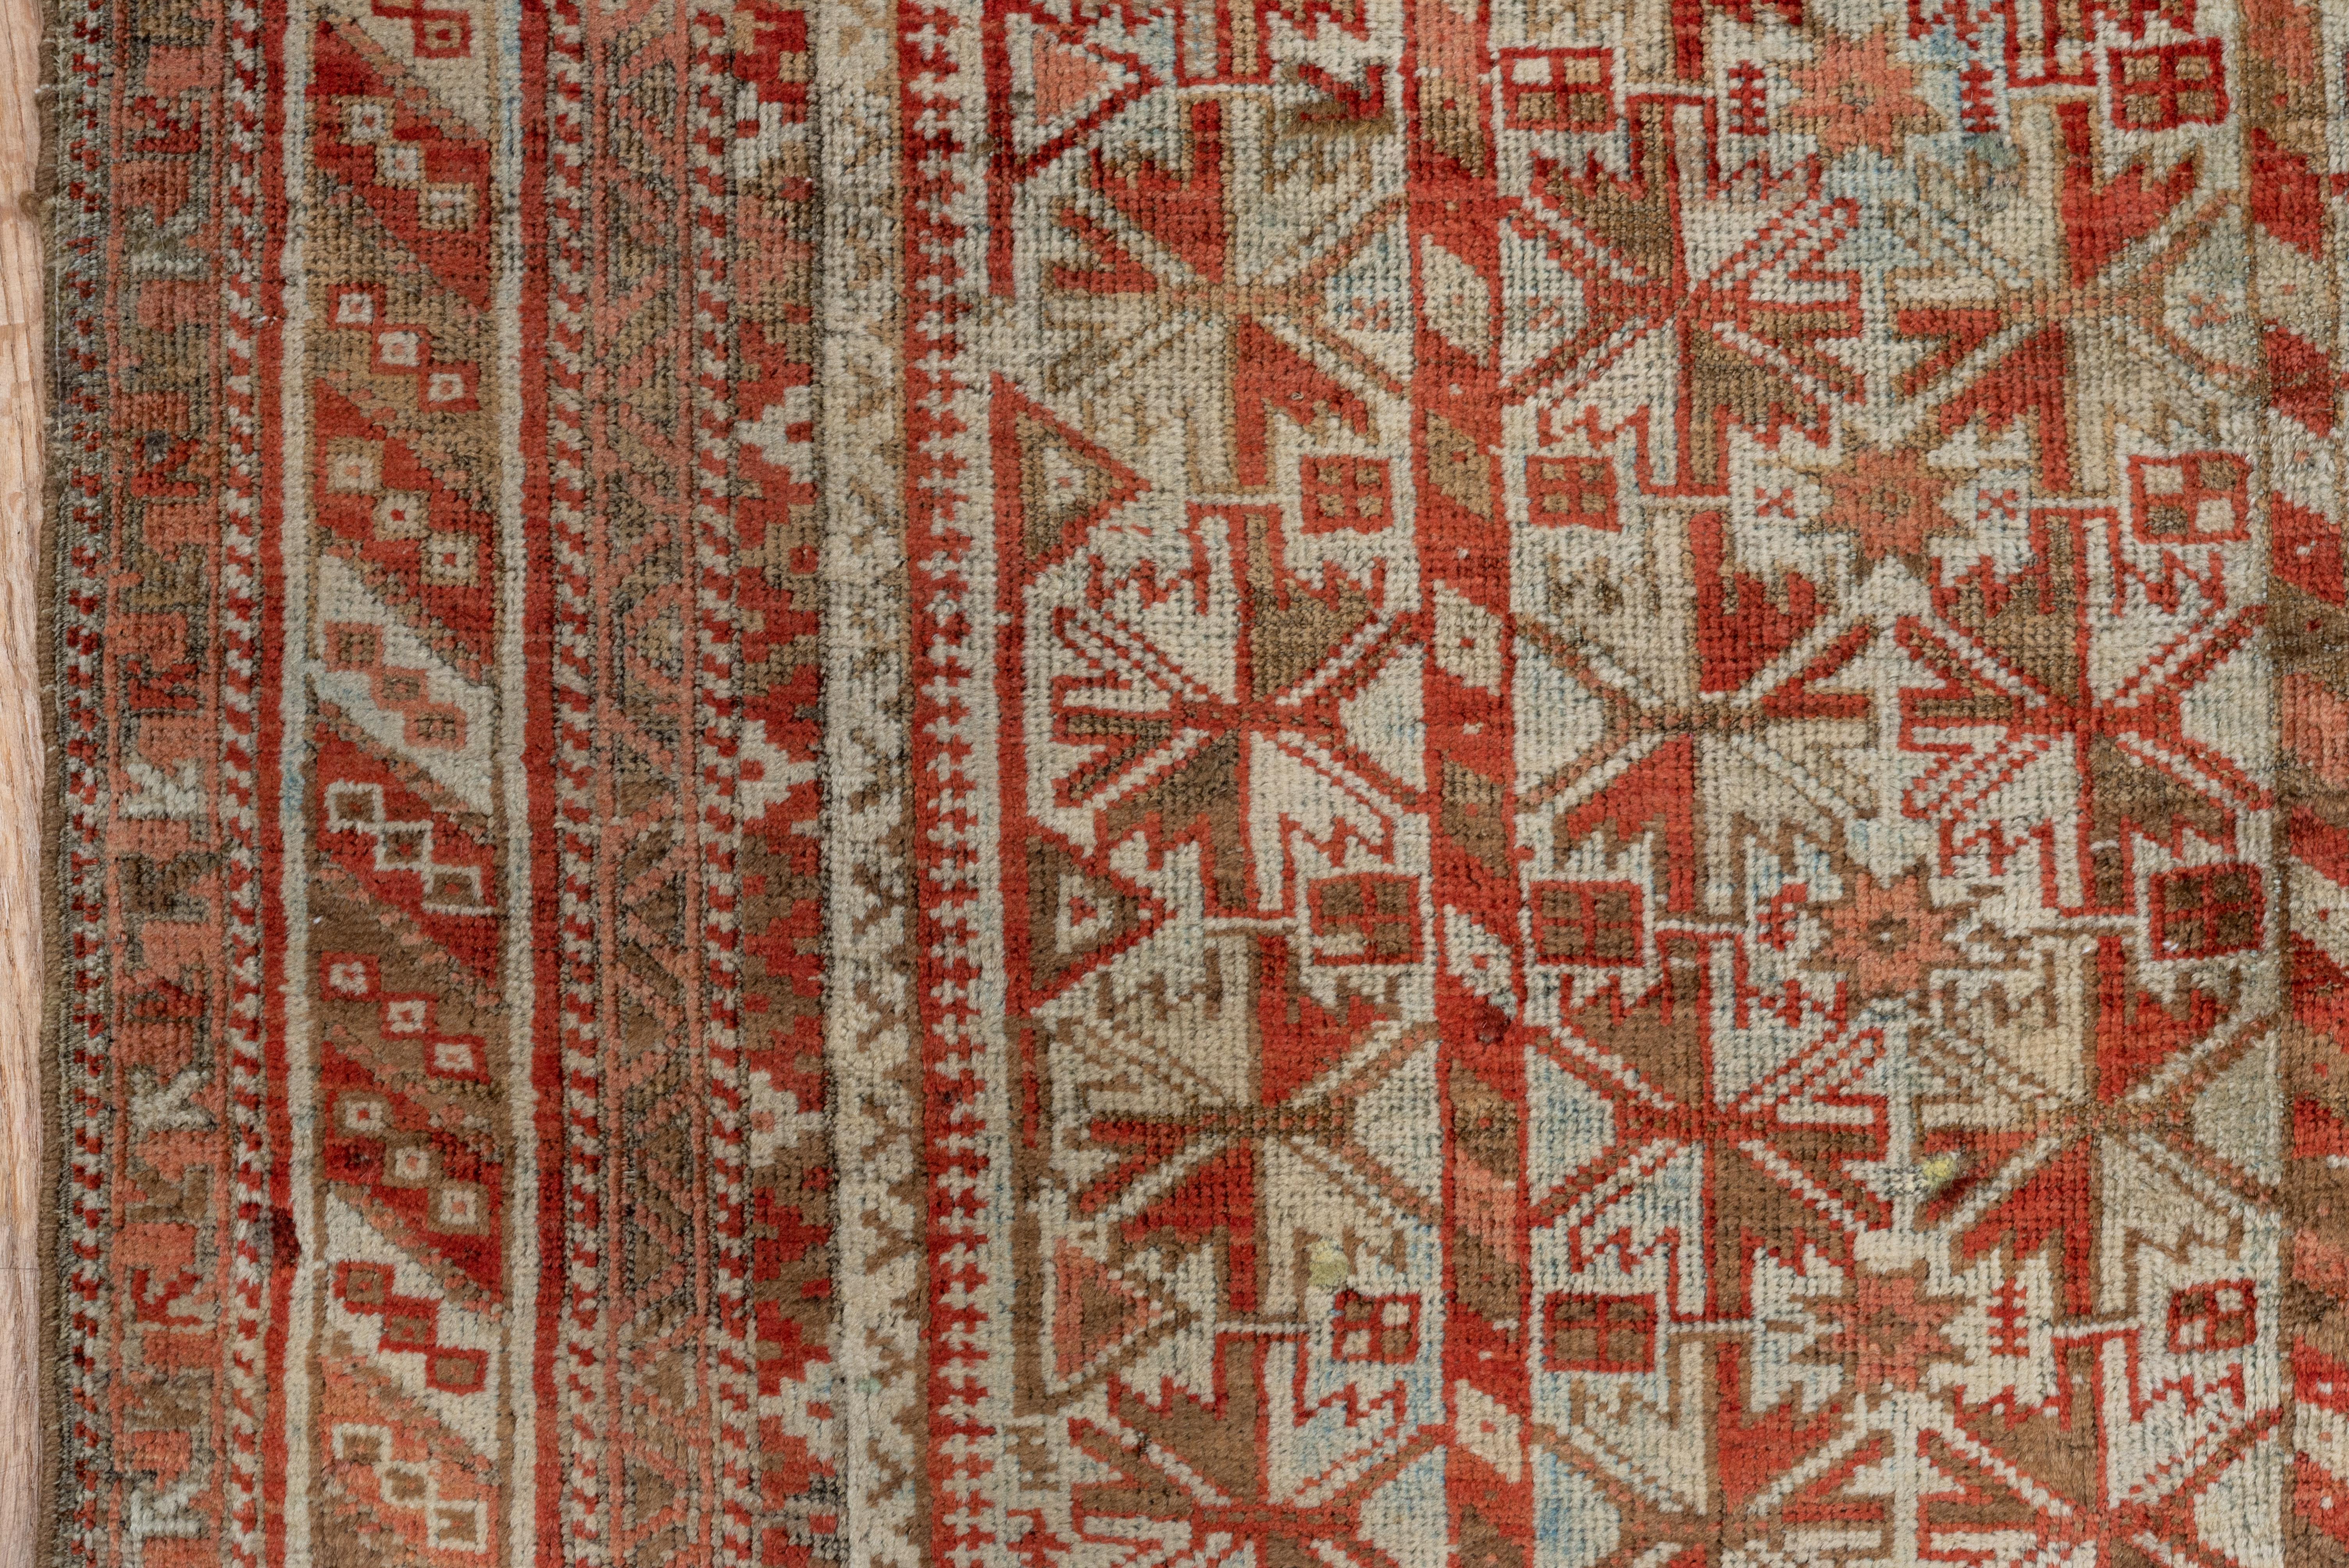 Tribal Beautiful Afghan Belouch Prayer Rug, Red, Seaform & Brown Tones, circa 1920s For Sale